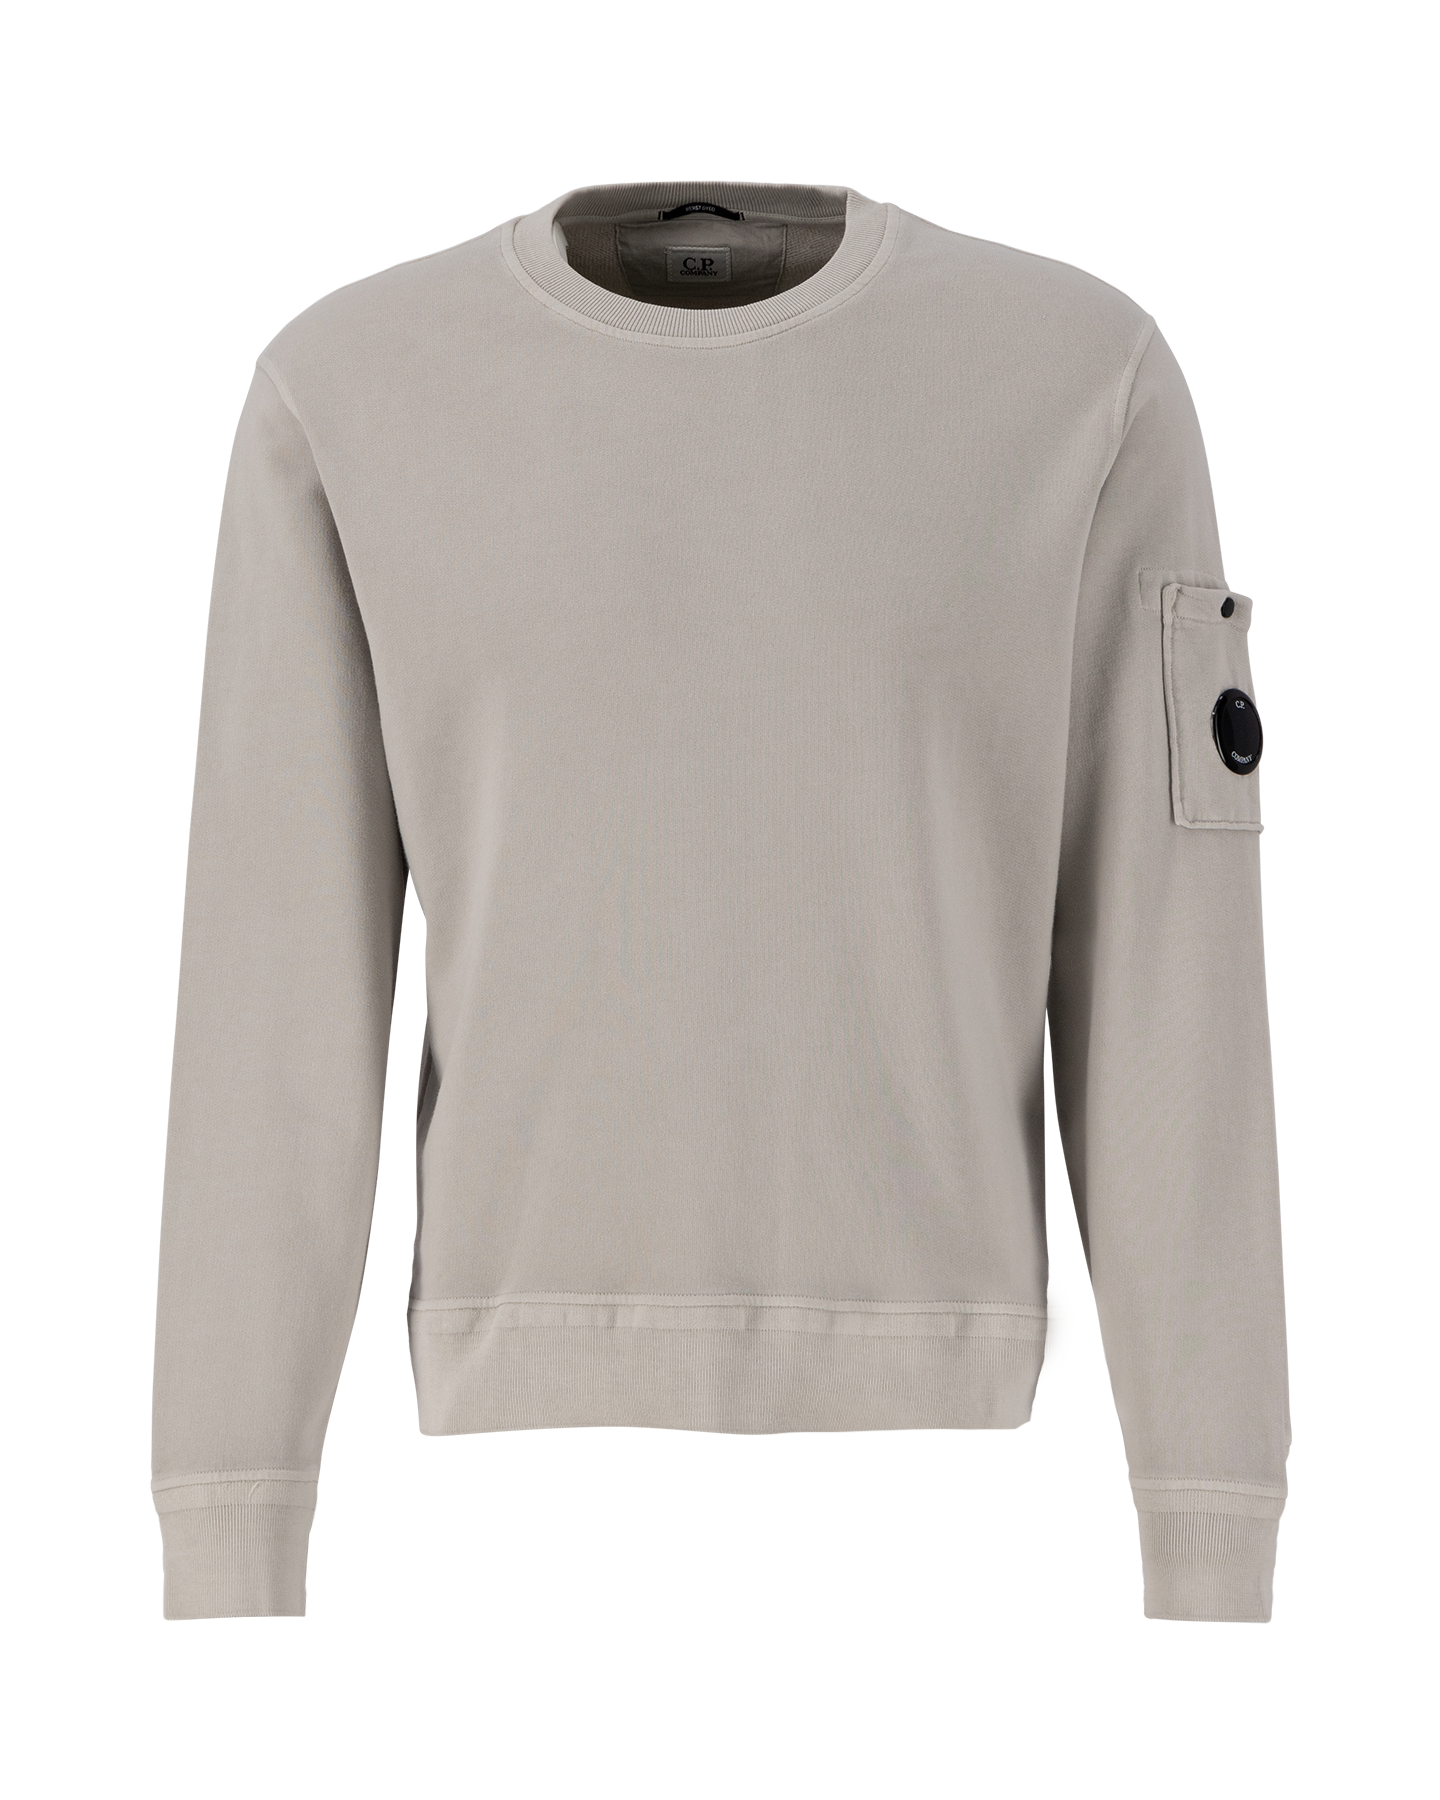 C.P. Company Cotton Fleece Resist Dyed Sweatshirt GRIJS 1